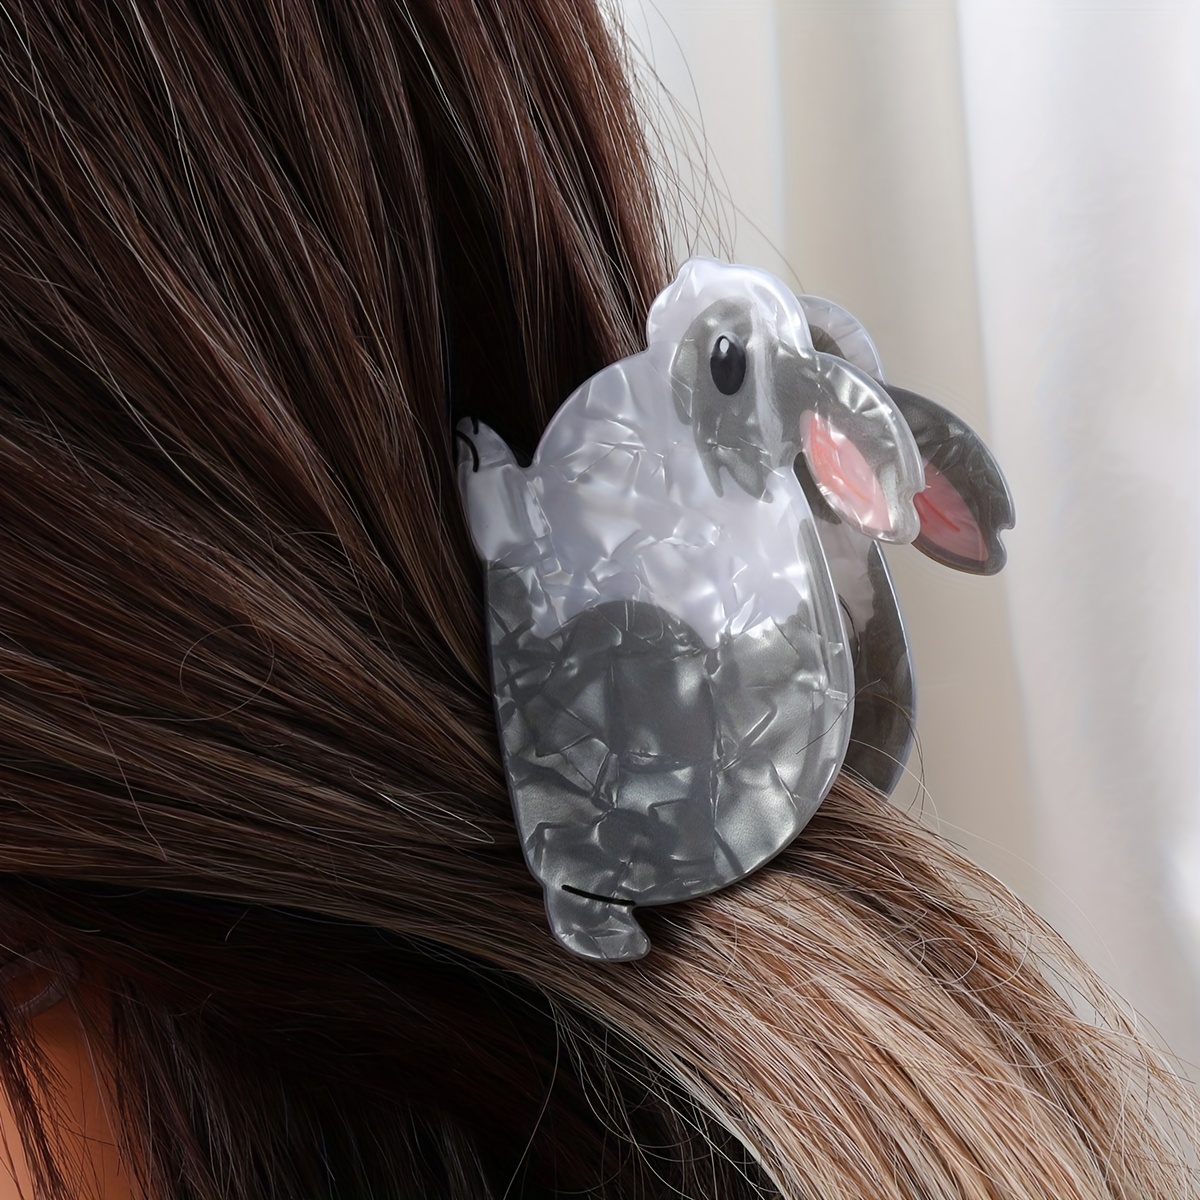 Temu 50pcs Creative Cute Cartoon Hair Clips Set Decorative Hair Accessories Holiday Party Gift for Girls,$5.99,free returns&free ship,42-piece Set [Bag]